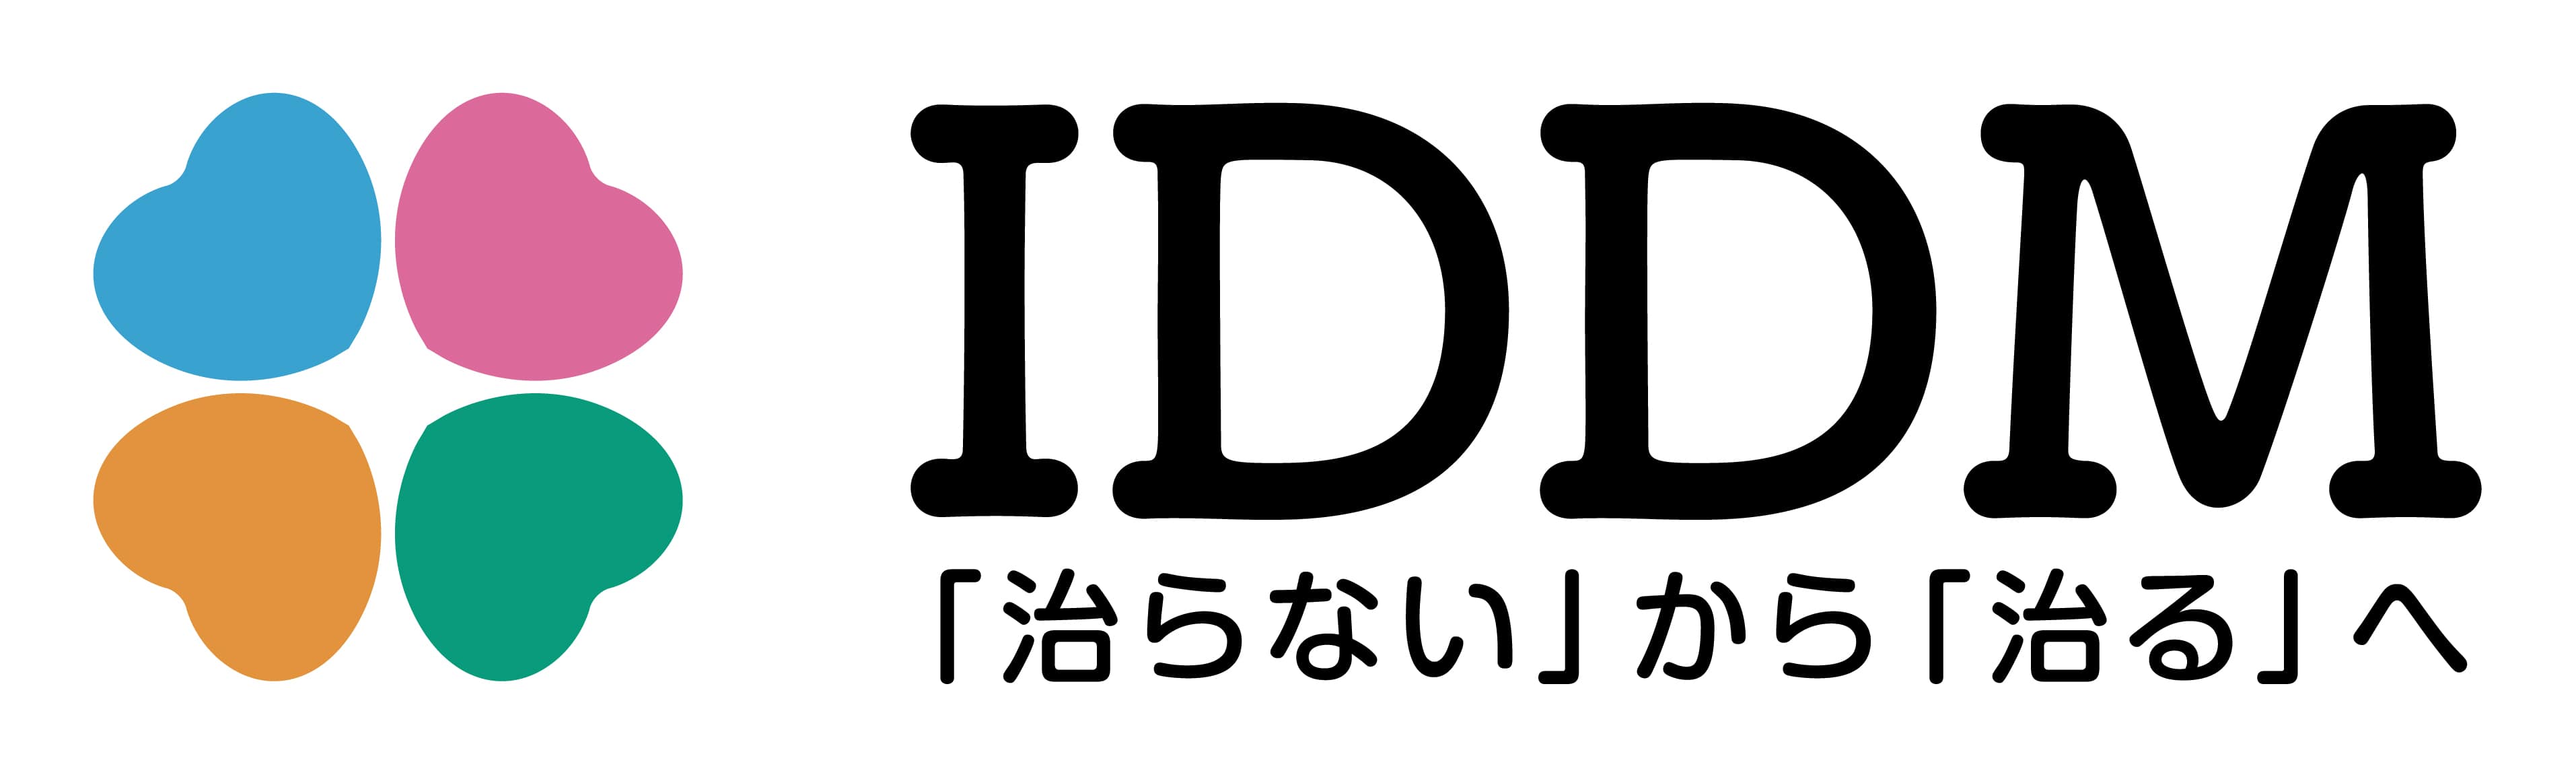 認定特定非営利活動法人日本IDDMネットワーク